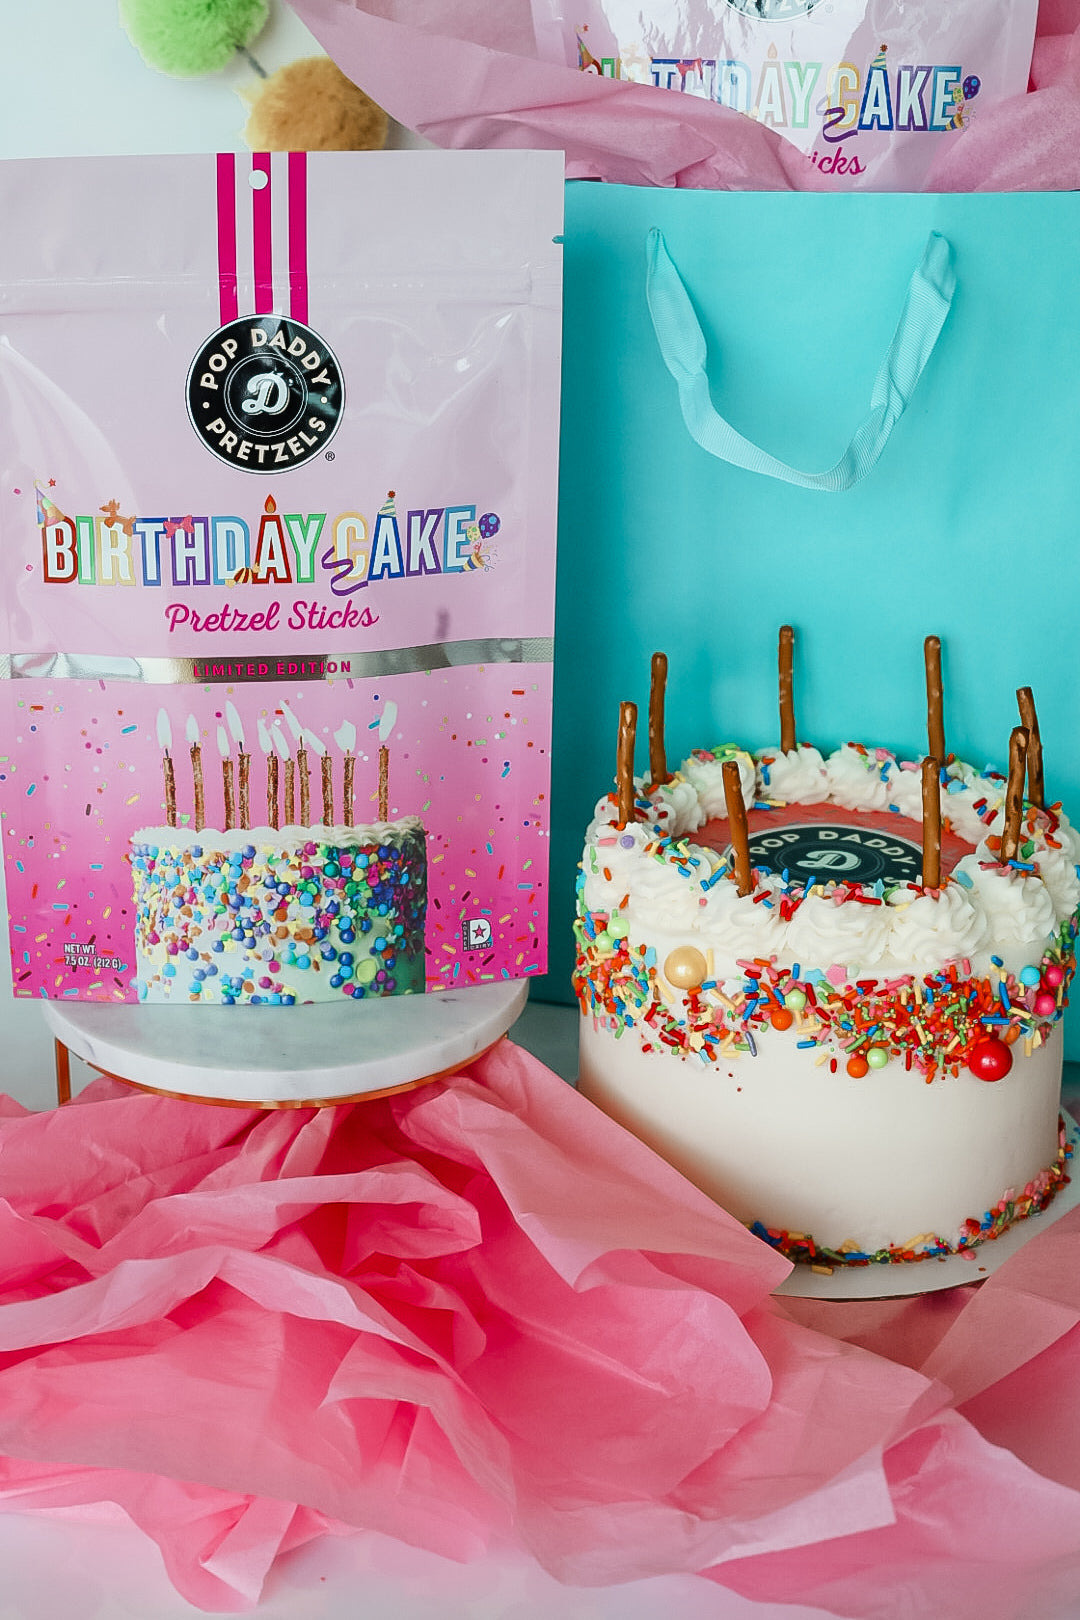 Birthday Cake Seasoned Pretzels (Limited Edition)